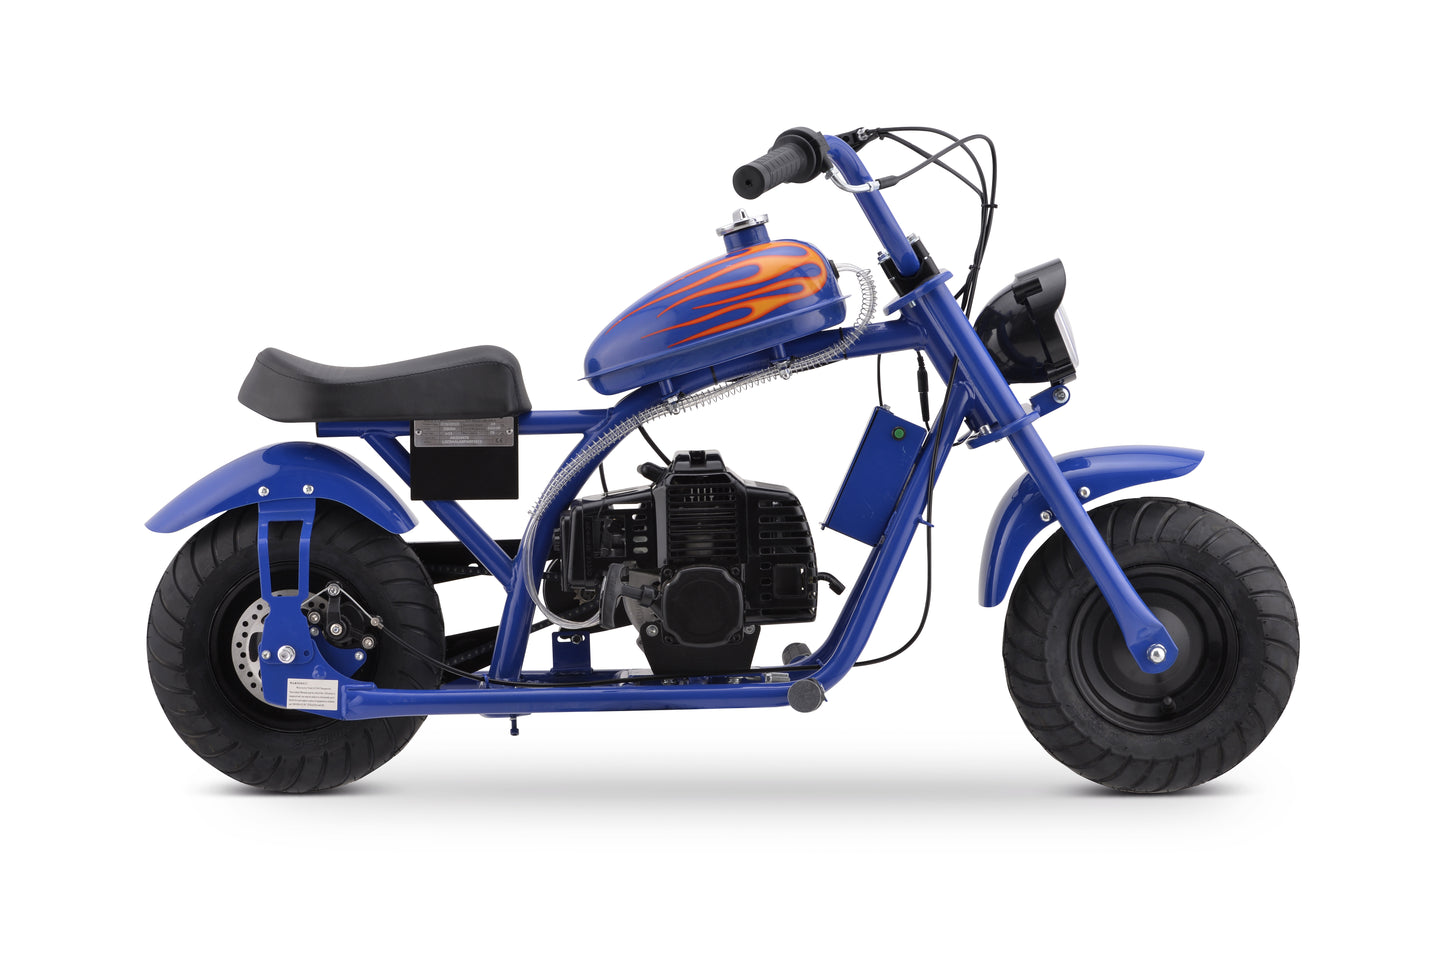 BLUE GBMOTO Mini Chopper Style kid Bike, 49.4 CC 2-Stroke Dirt Bike with Big Headlight, Premium Tire, Metal Frame, Disc Brakes, Max Load 165Lbs, Up to 20Mph, EPA Approved